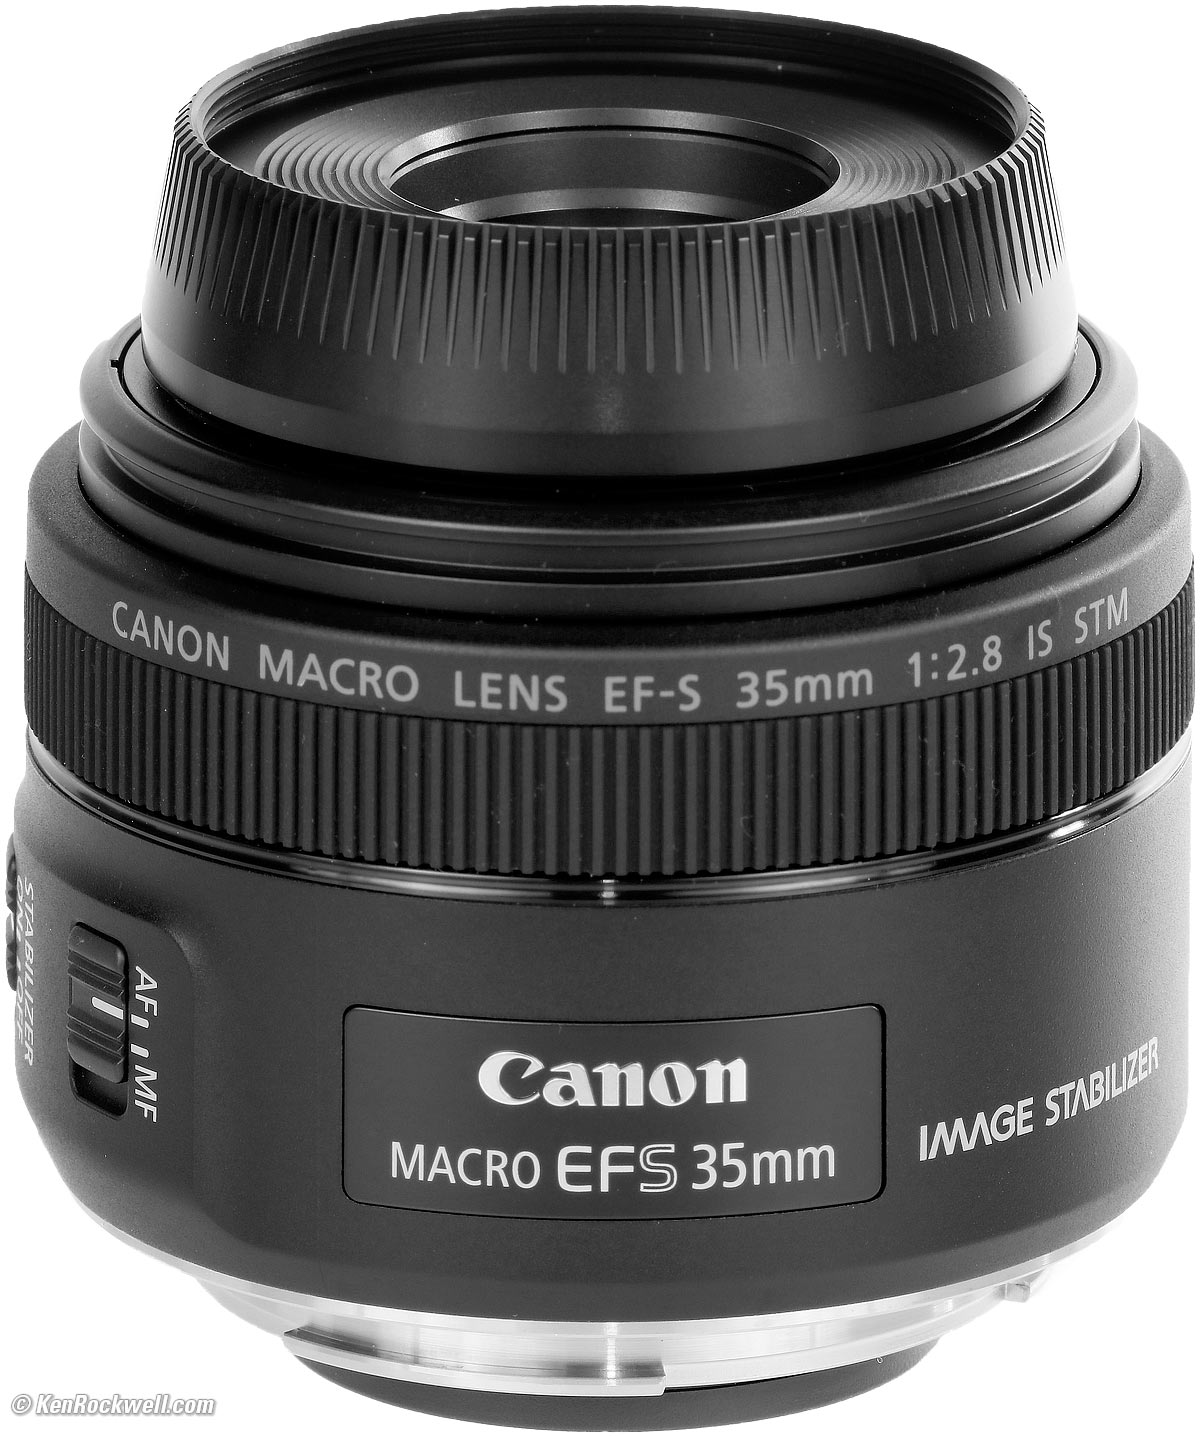 kugle ovn binding Canon 35mm f/2.8 Macro Review